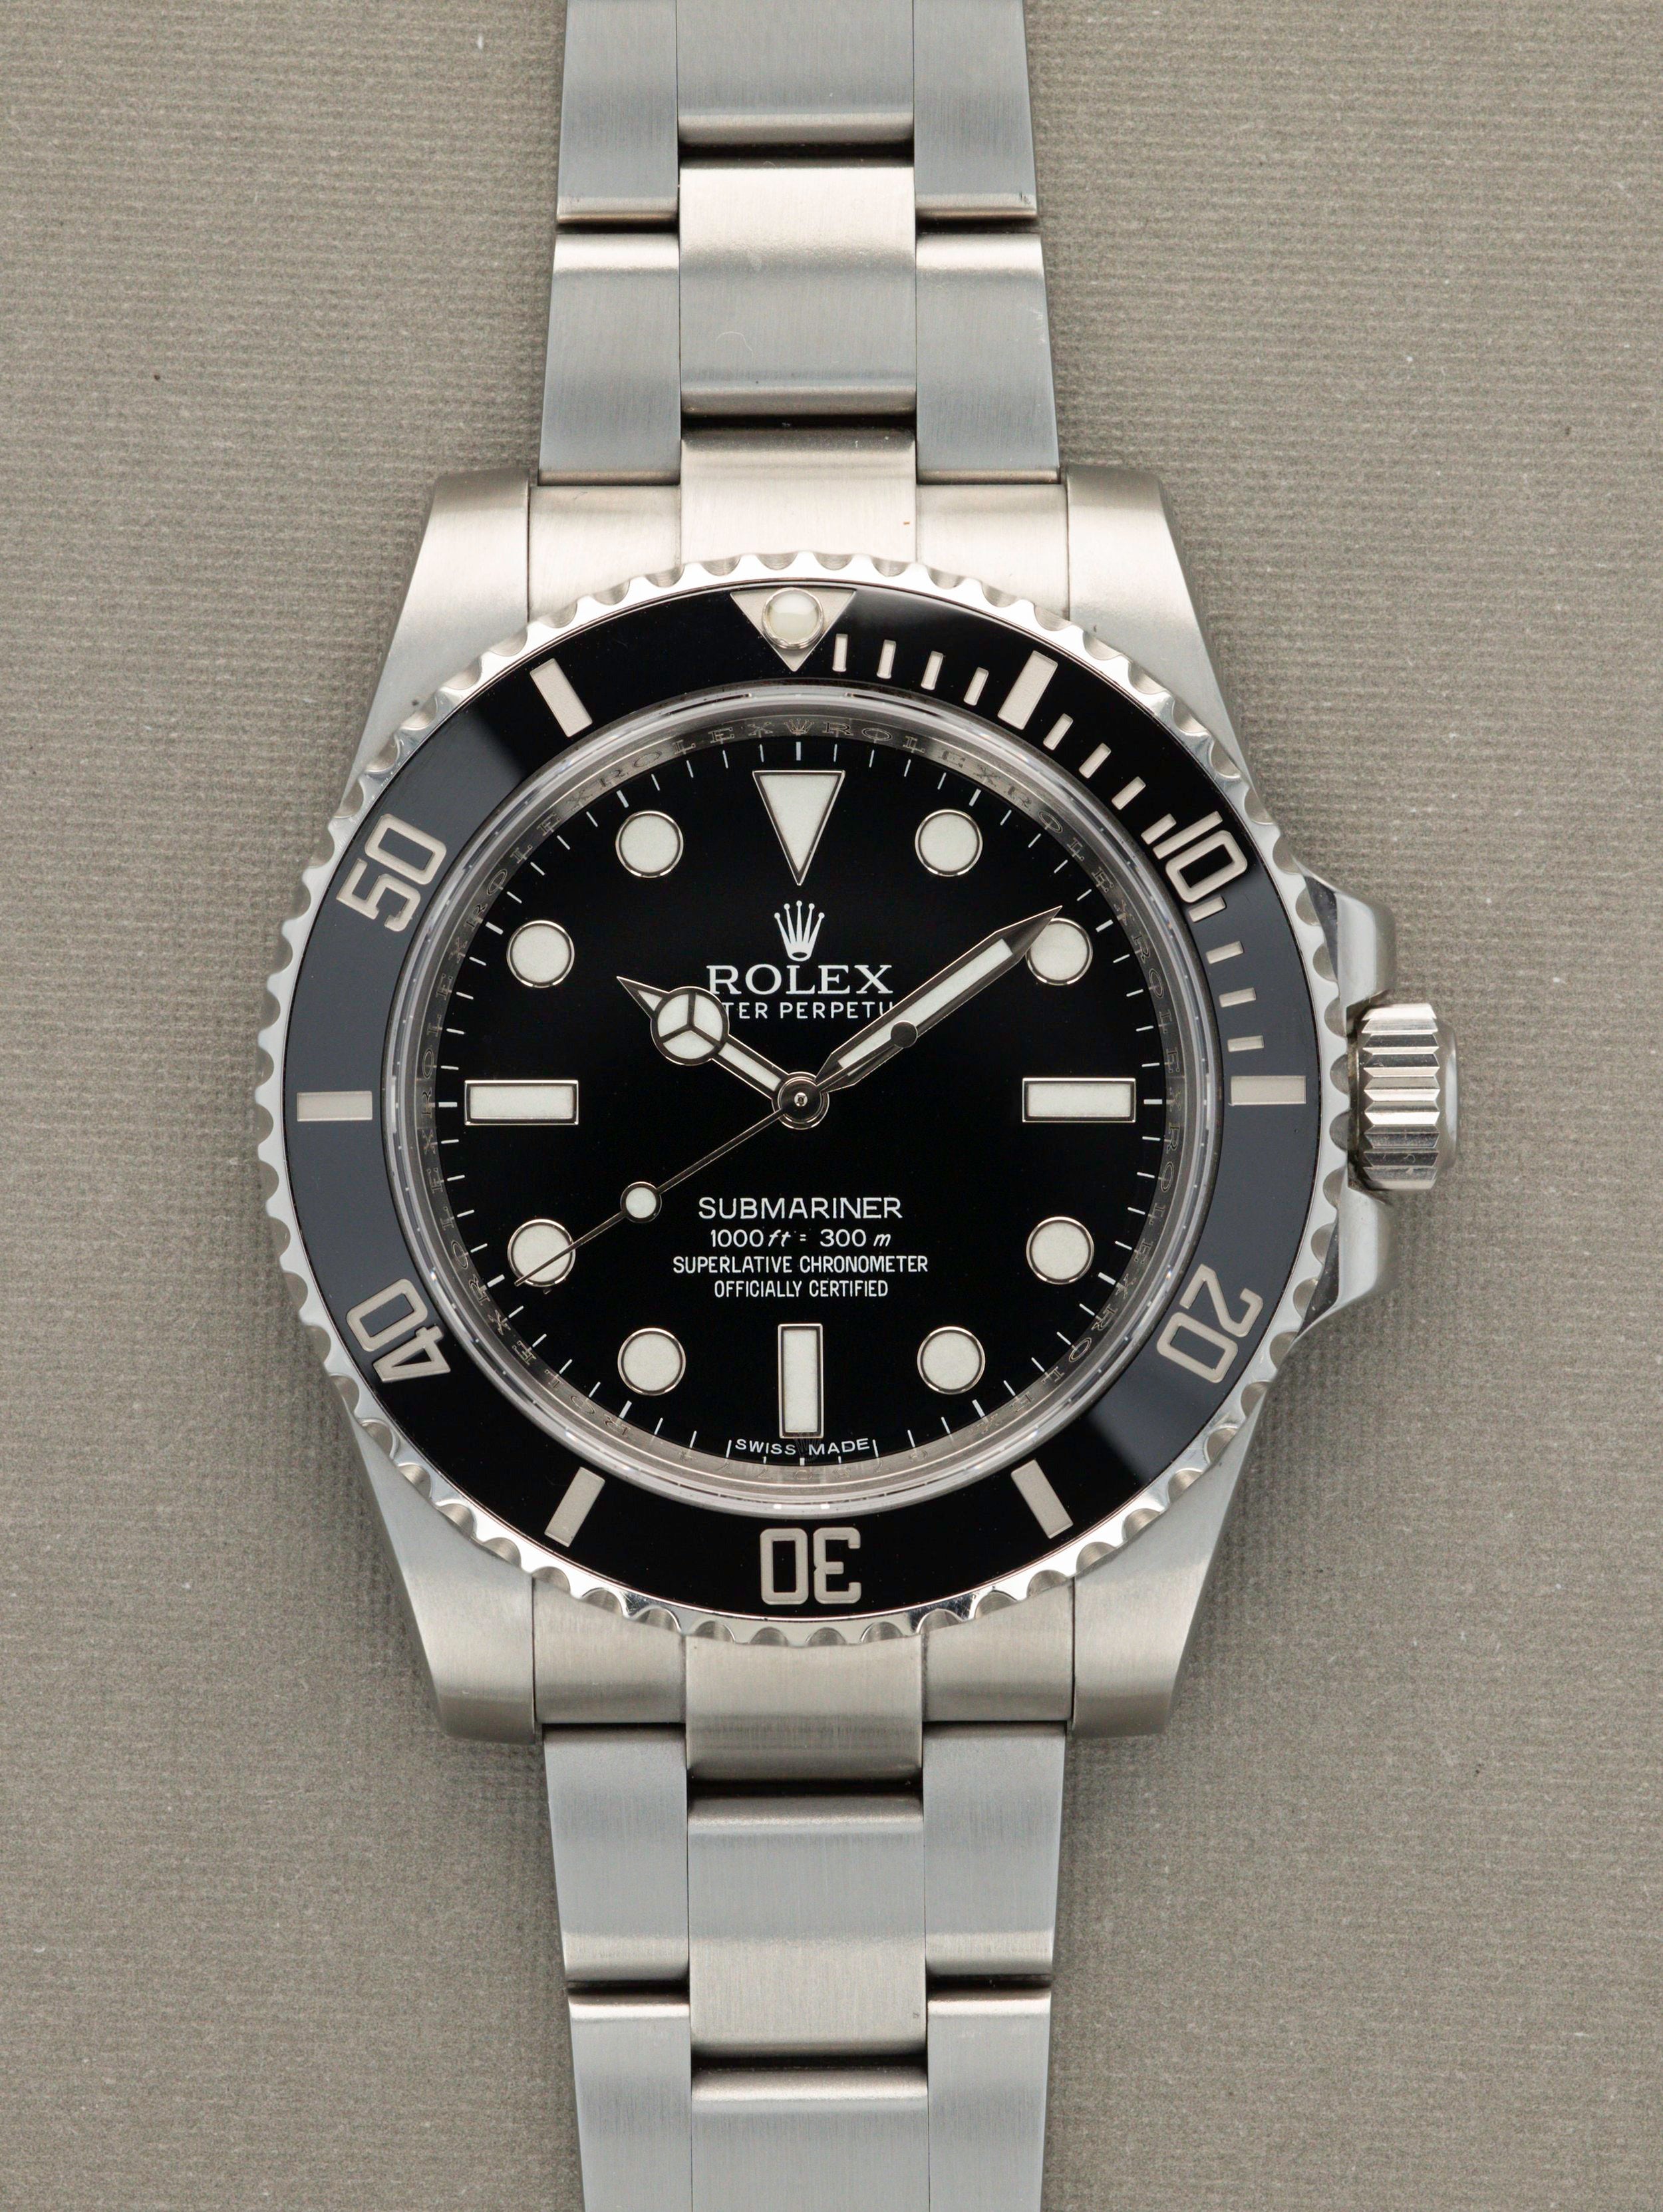 Rolex Submariner Ref. 114060 - 'No-Date' Ceramic Sub w/ box and papers